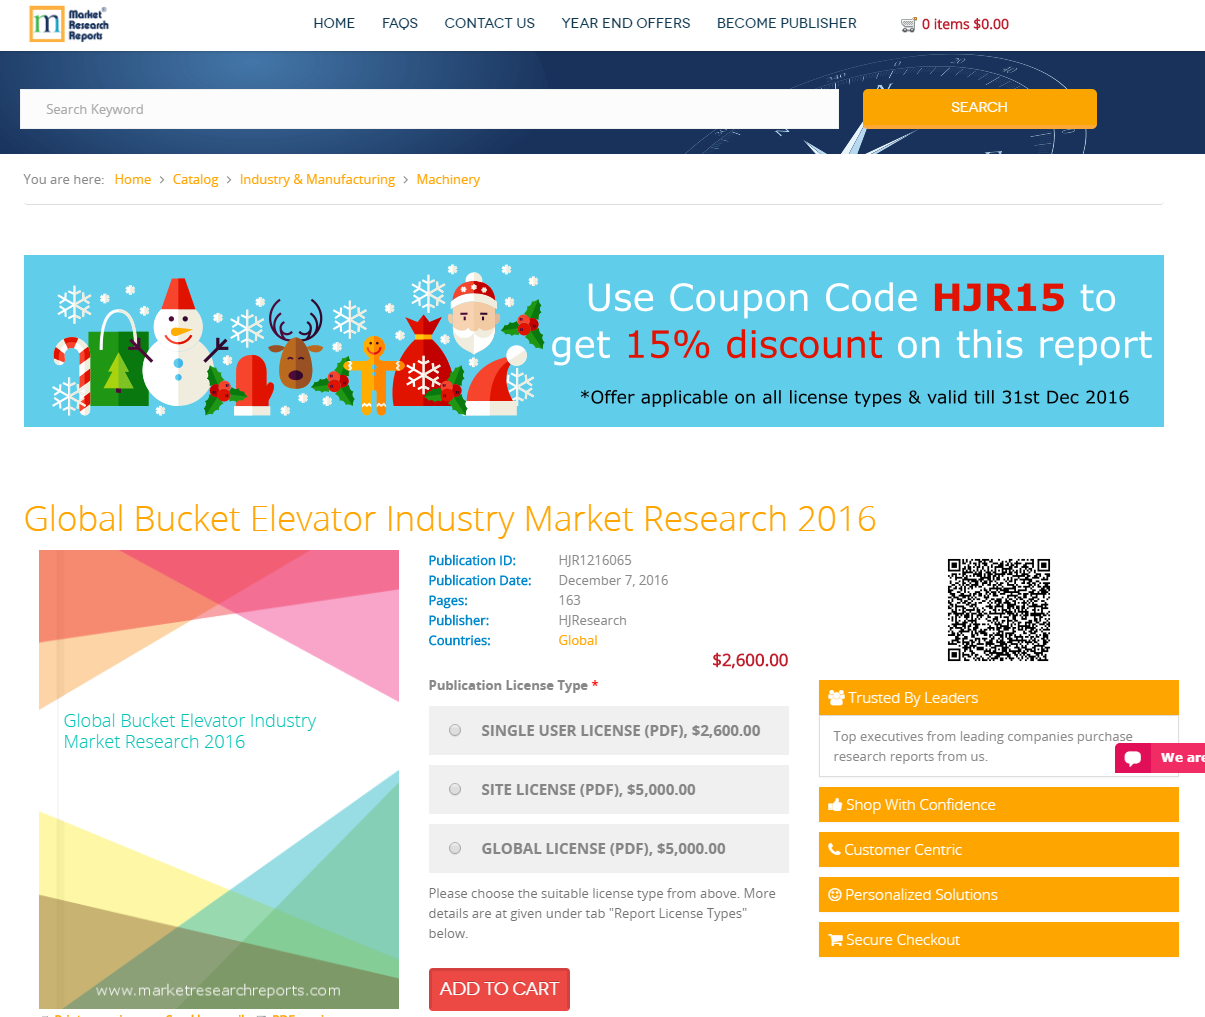 Global Bucket Elevator Industry Market Research 2016